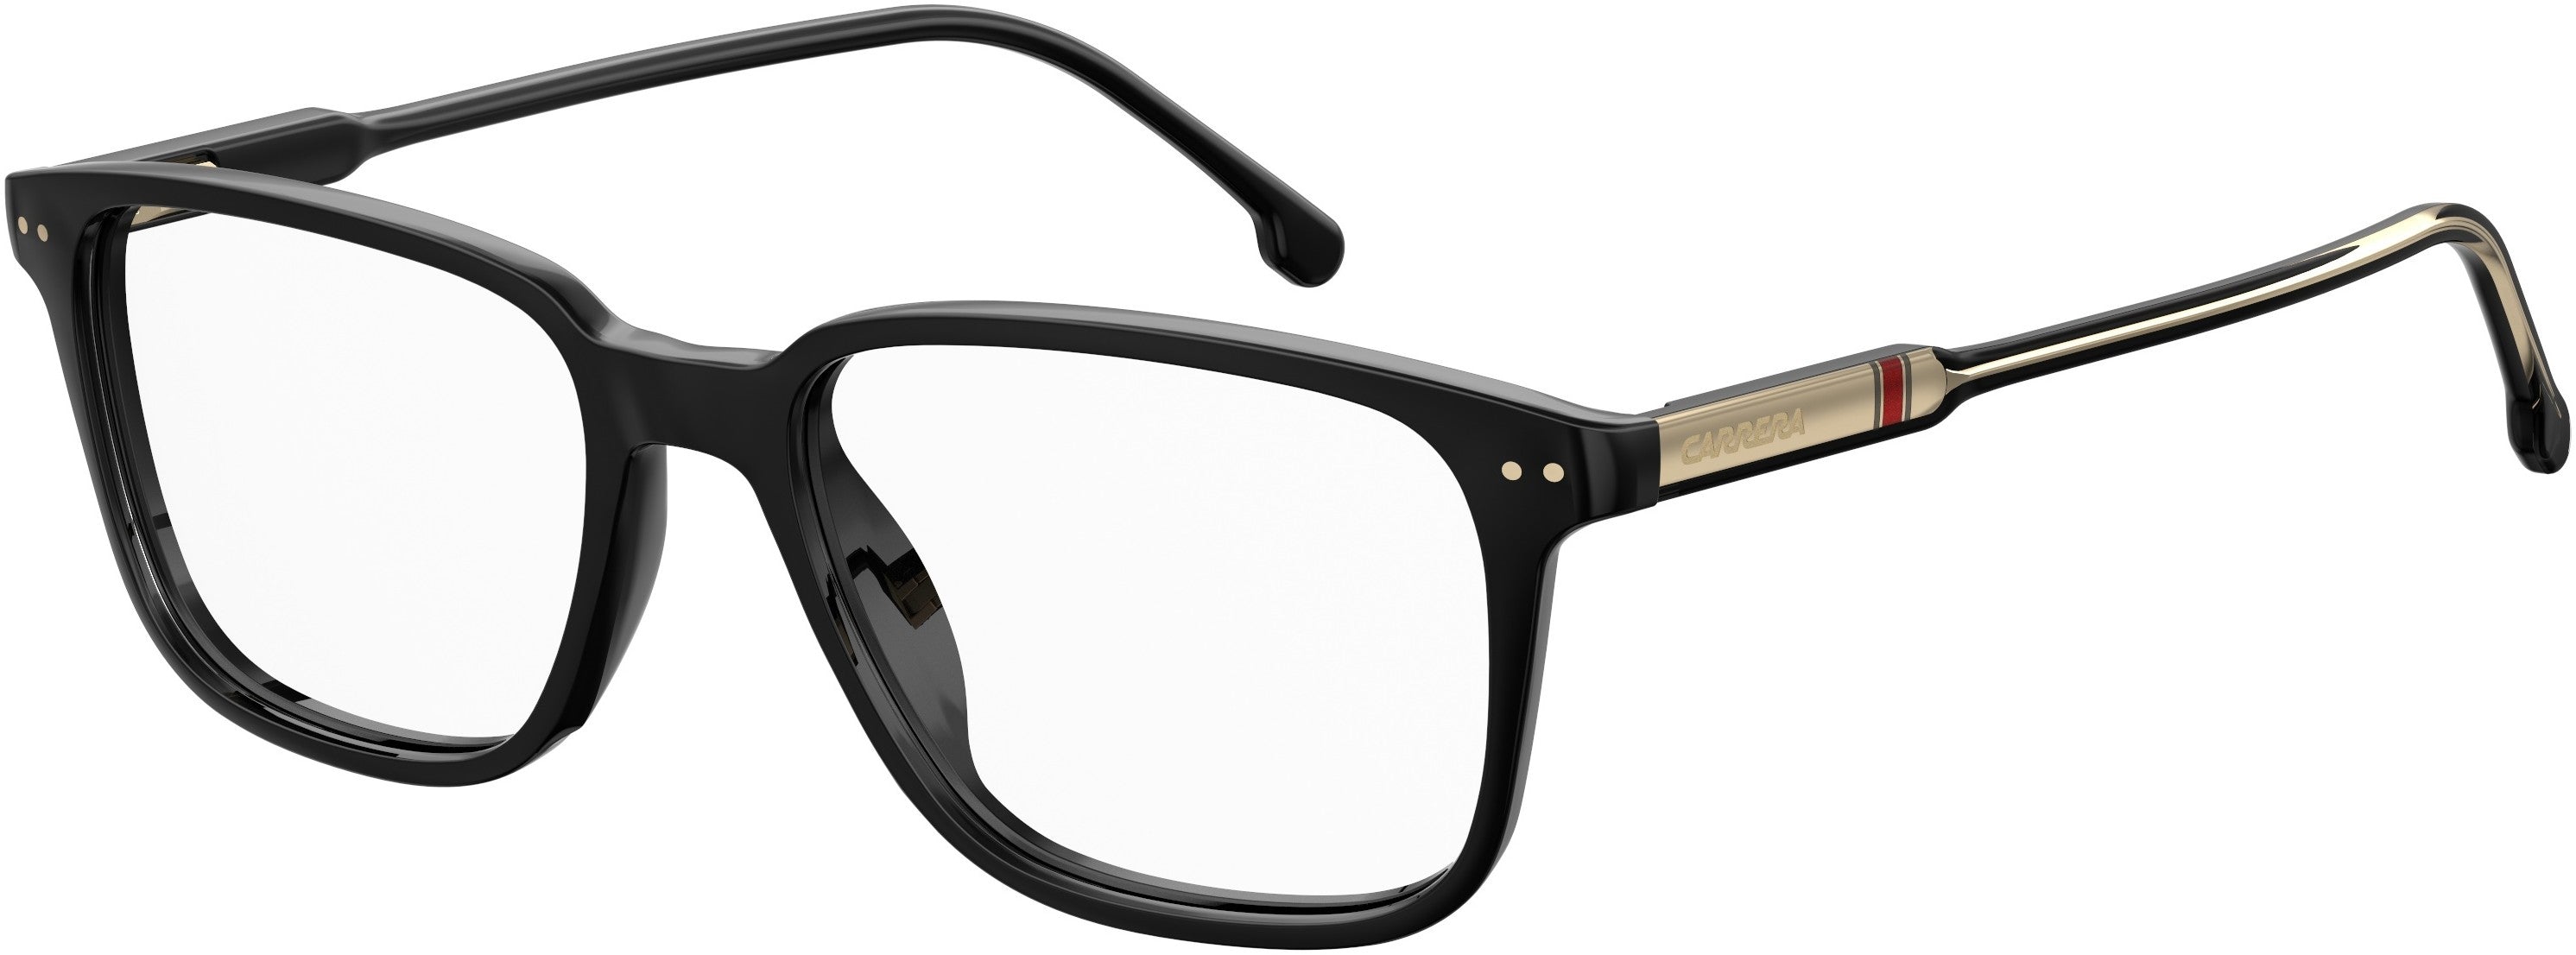  Carrera 213 Rectangular Eyeglasses 0807-0807  Black (00 Demo Lens)